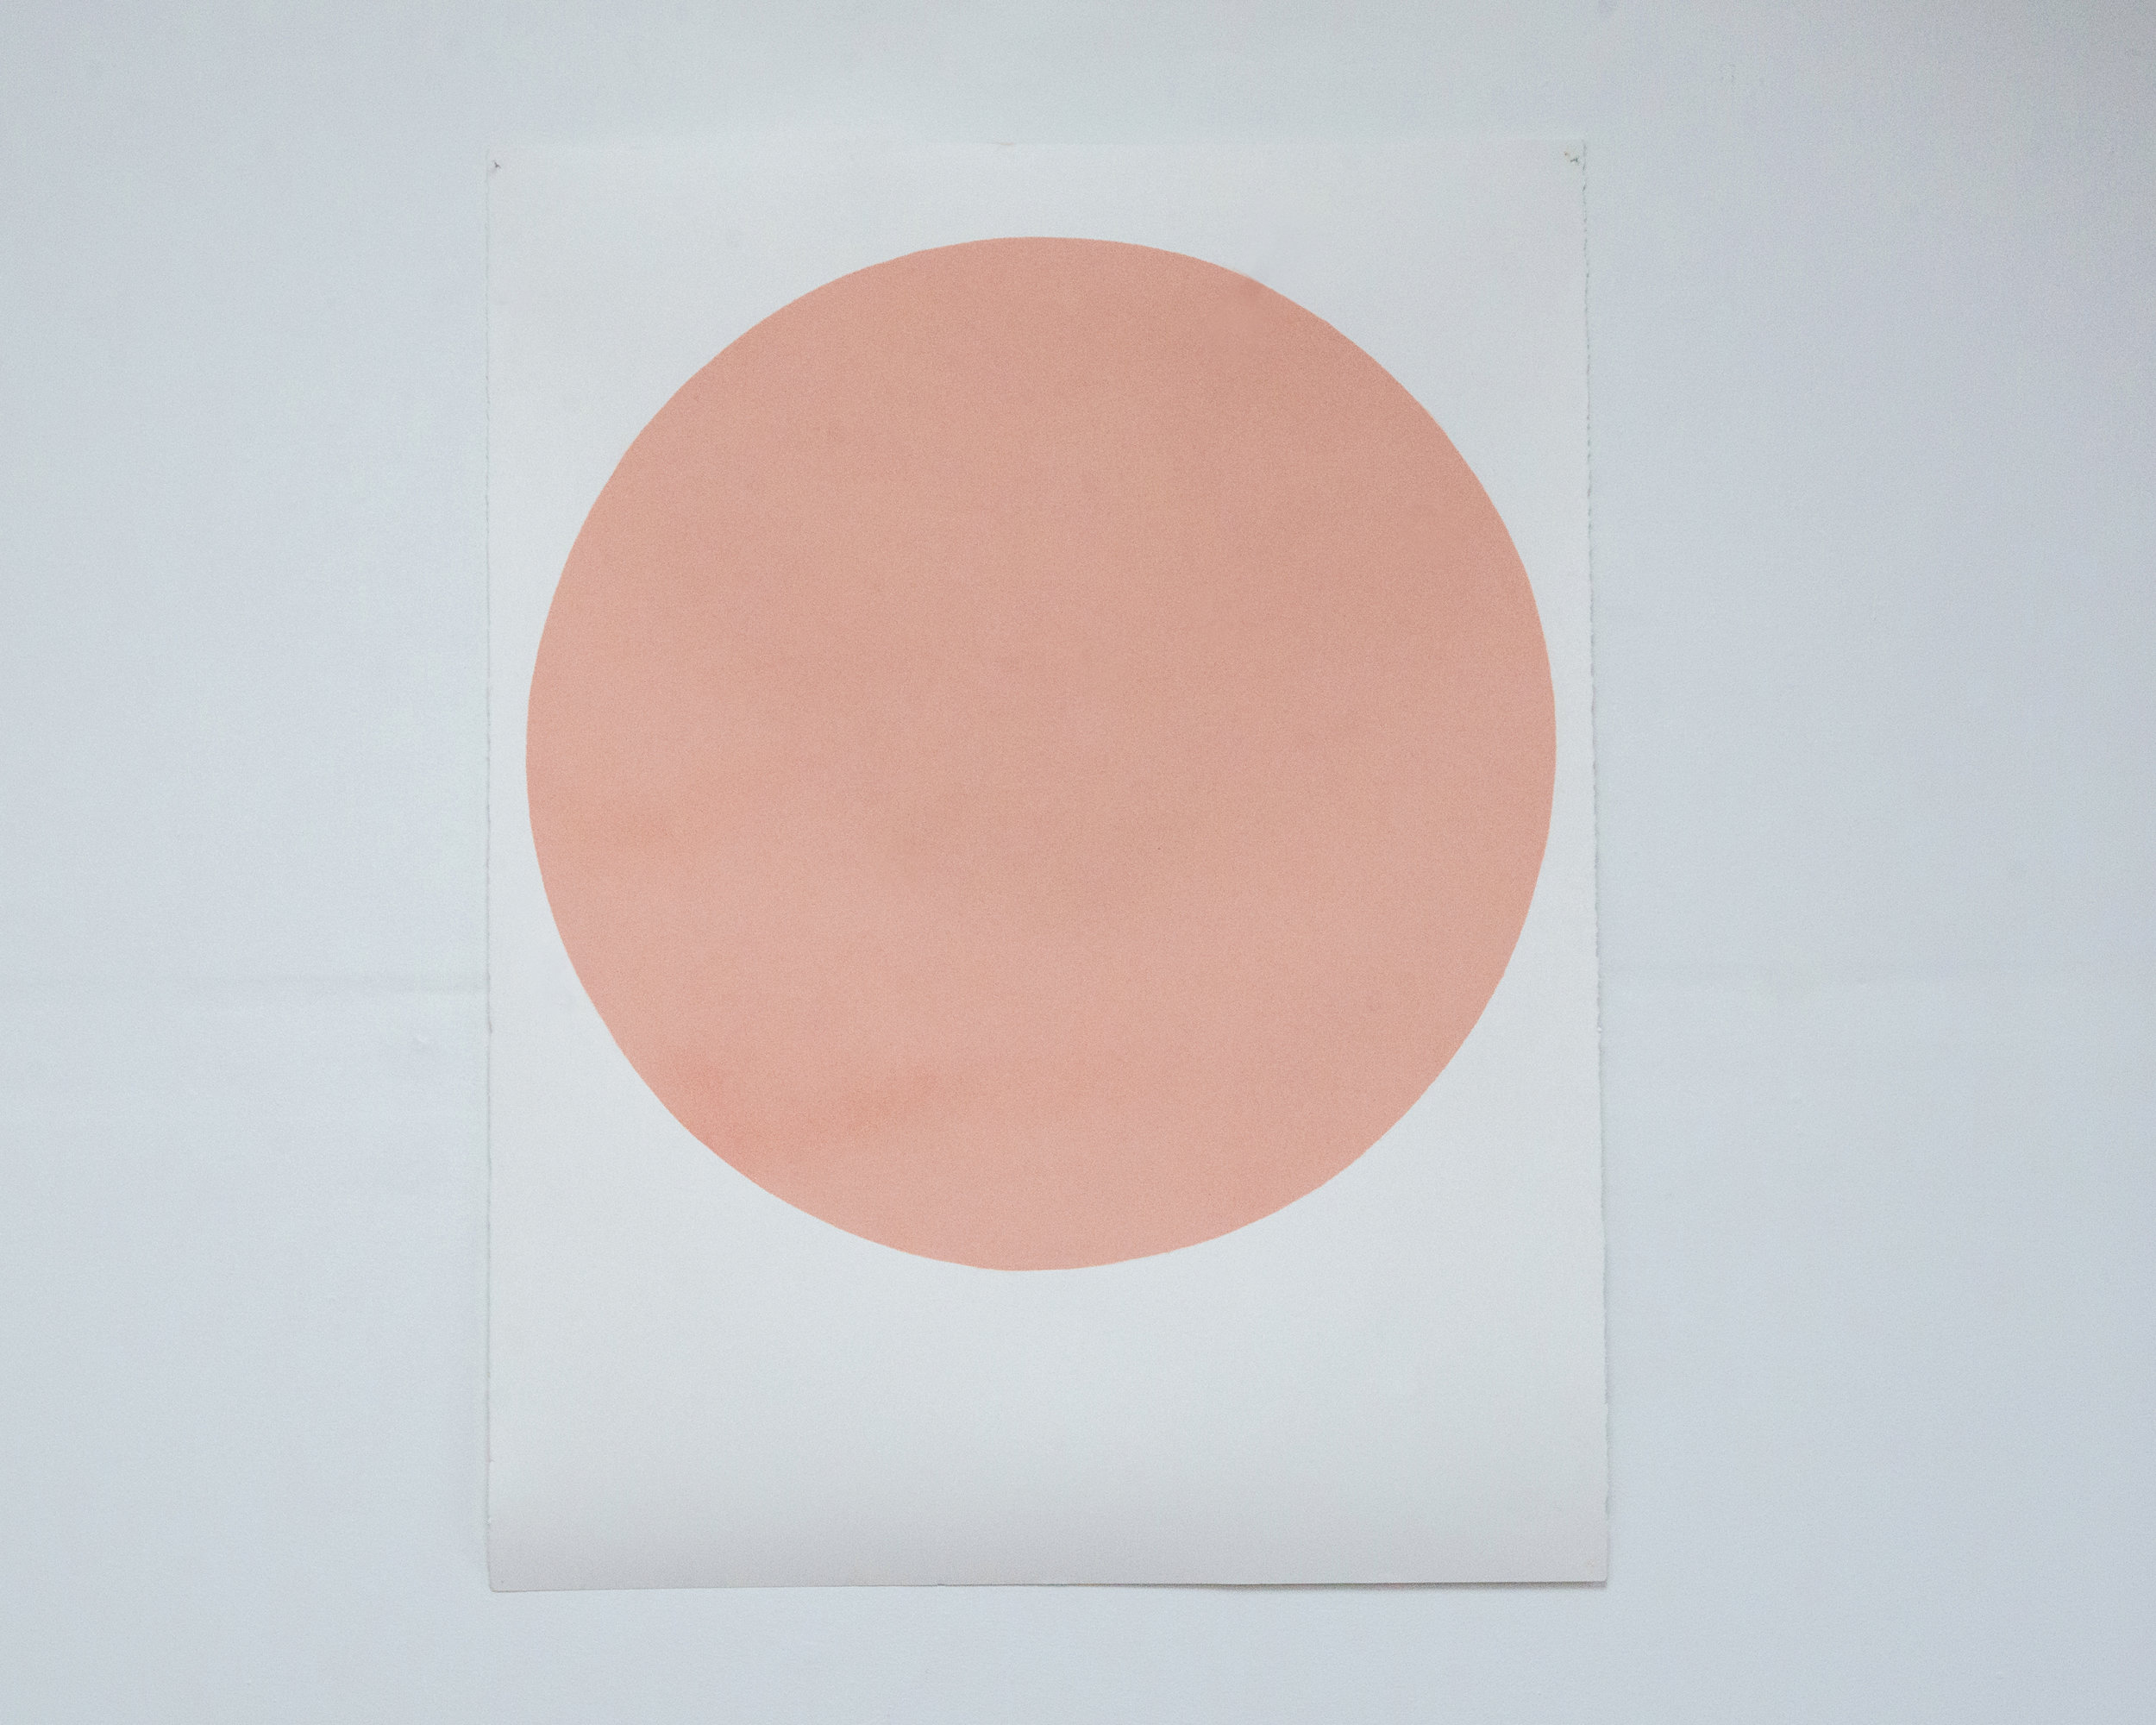  Margrethe Aanestad,  Eternal V , 2019. Pastel pencil on paper. 50x38 inches     